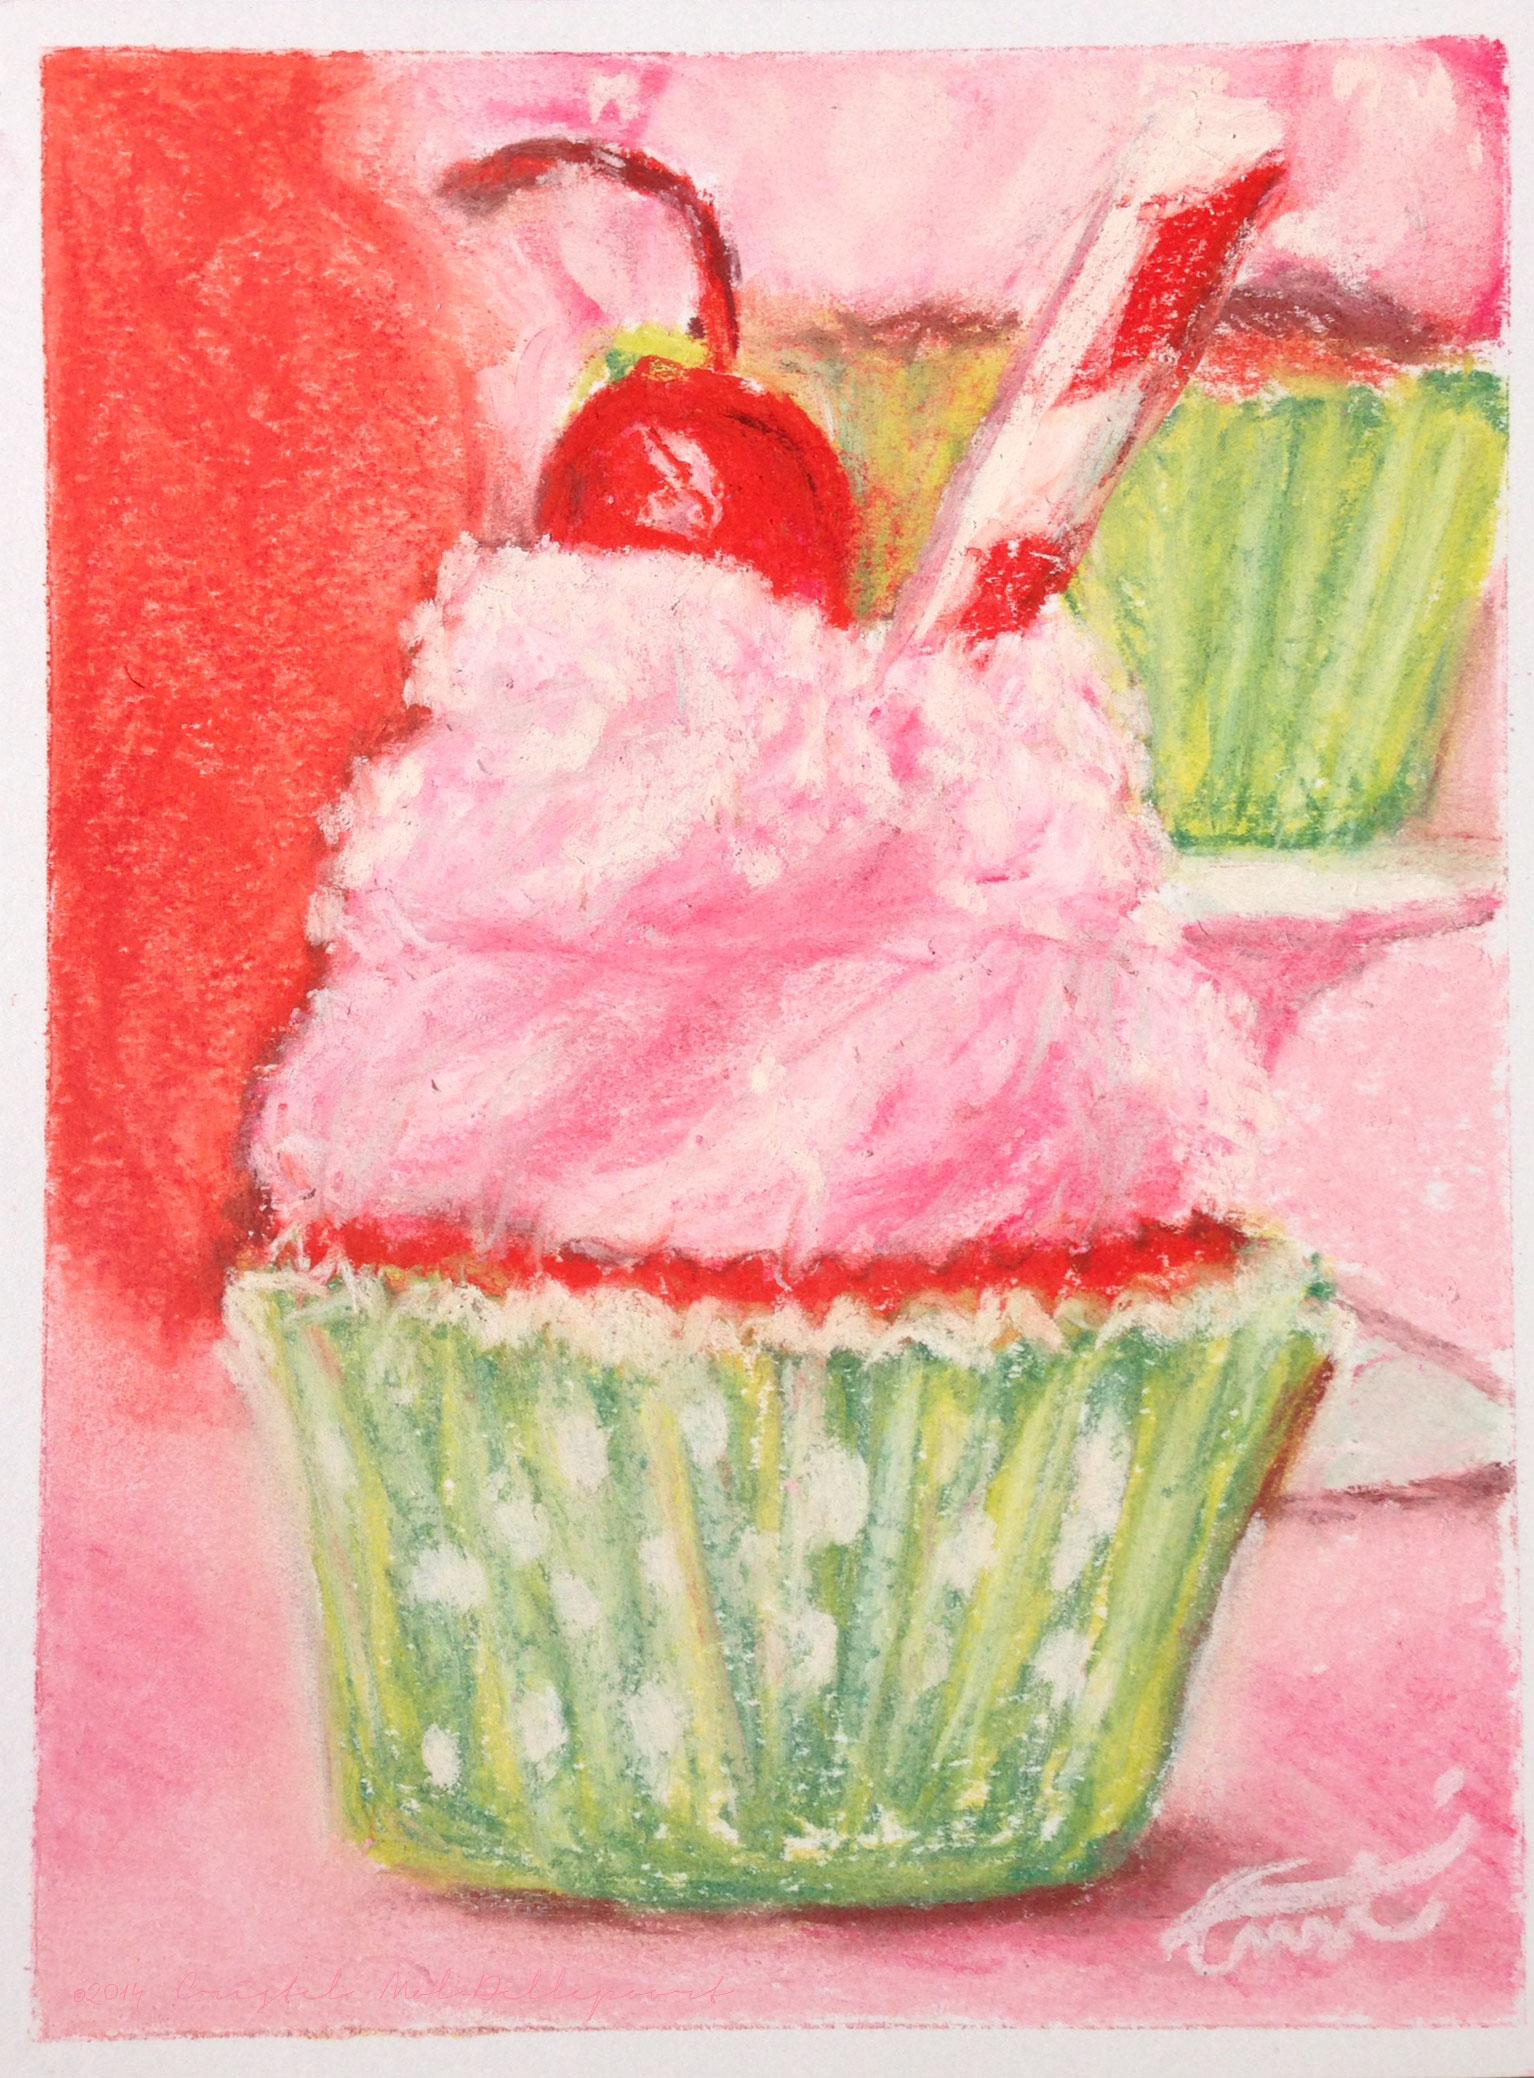 cherry-limeade-cupcake-pastel-cmd